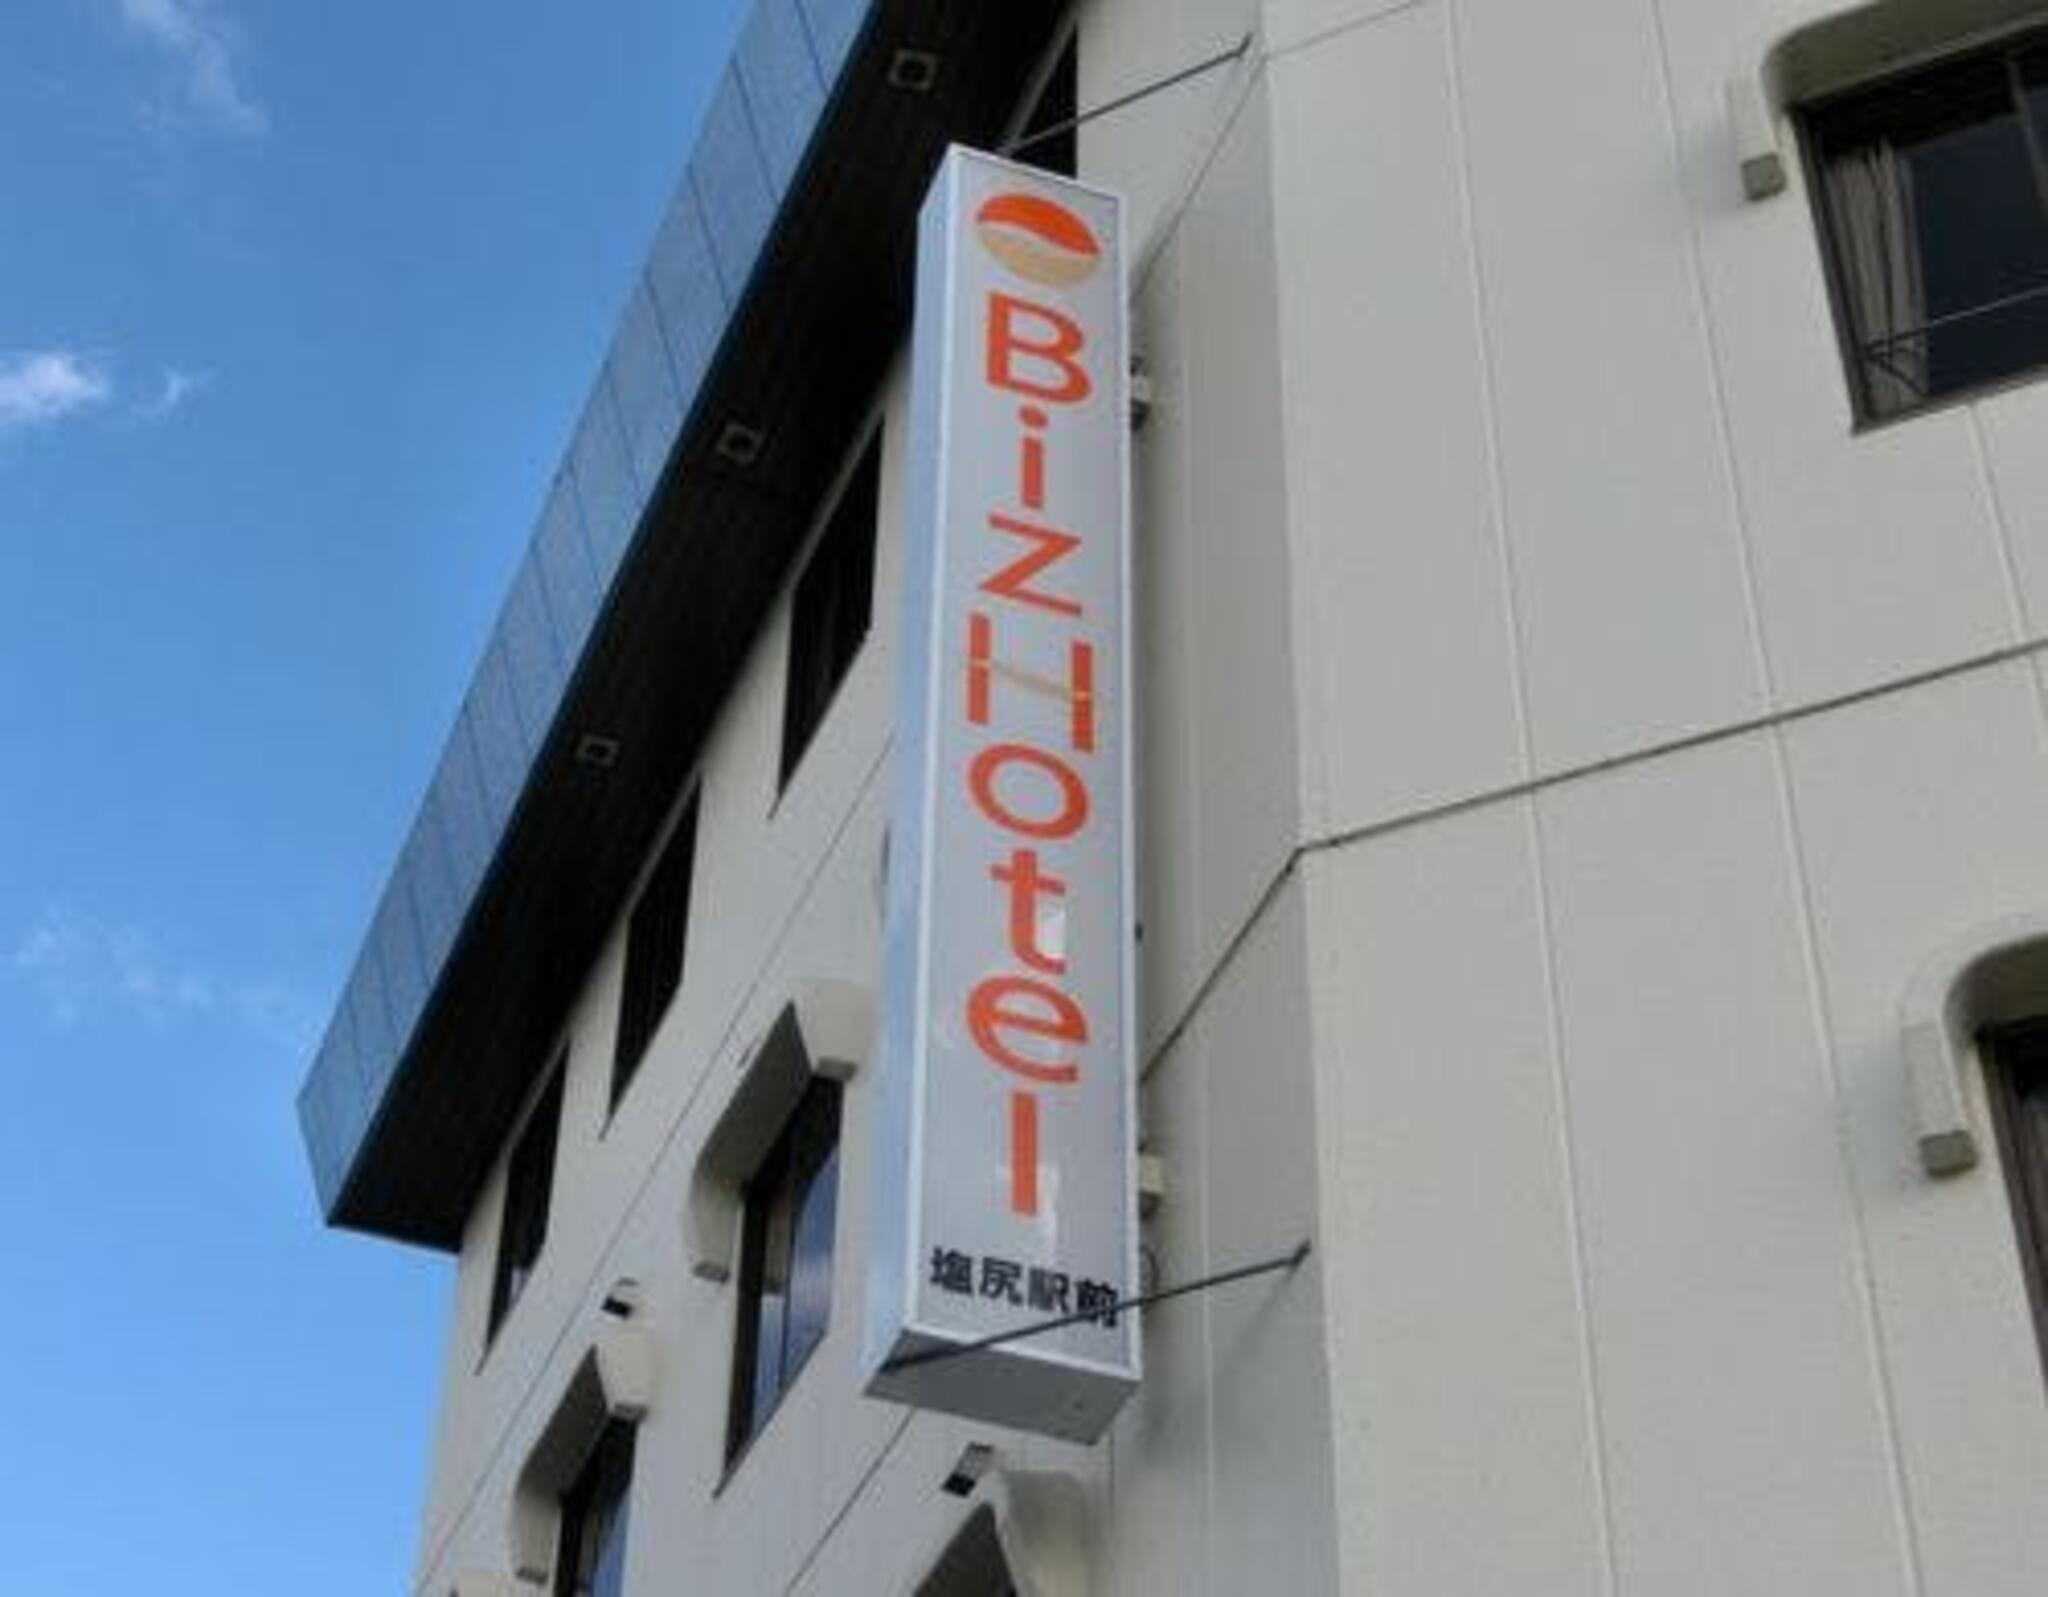 Biz Hotel 塩尻駅前の代表写真7